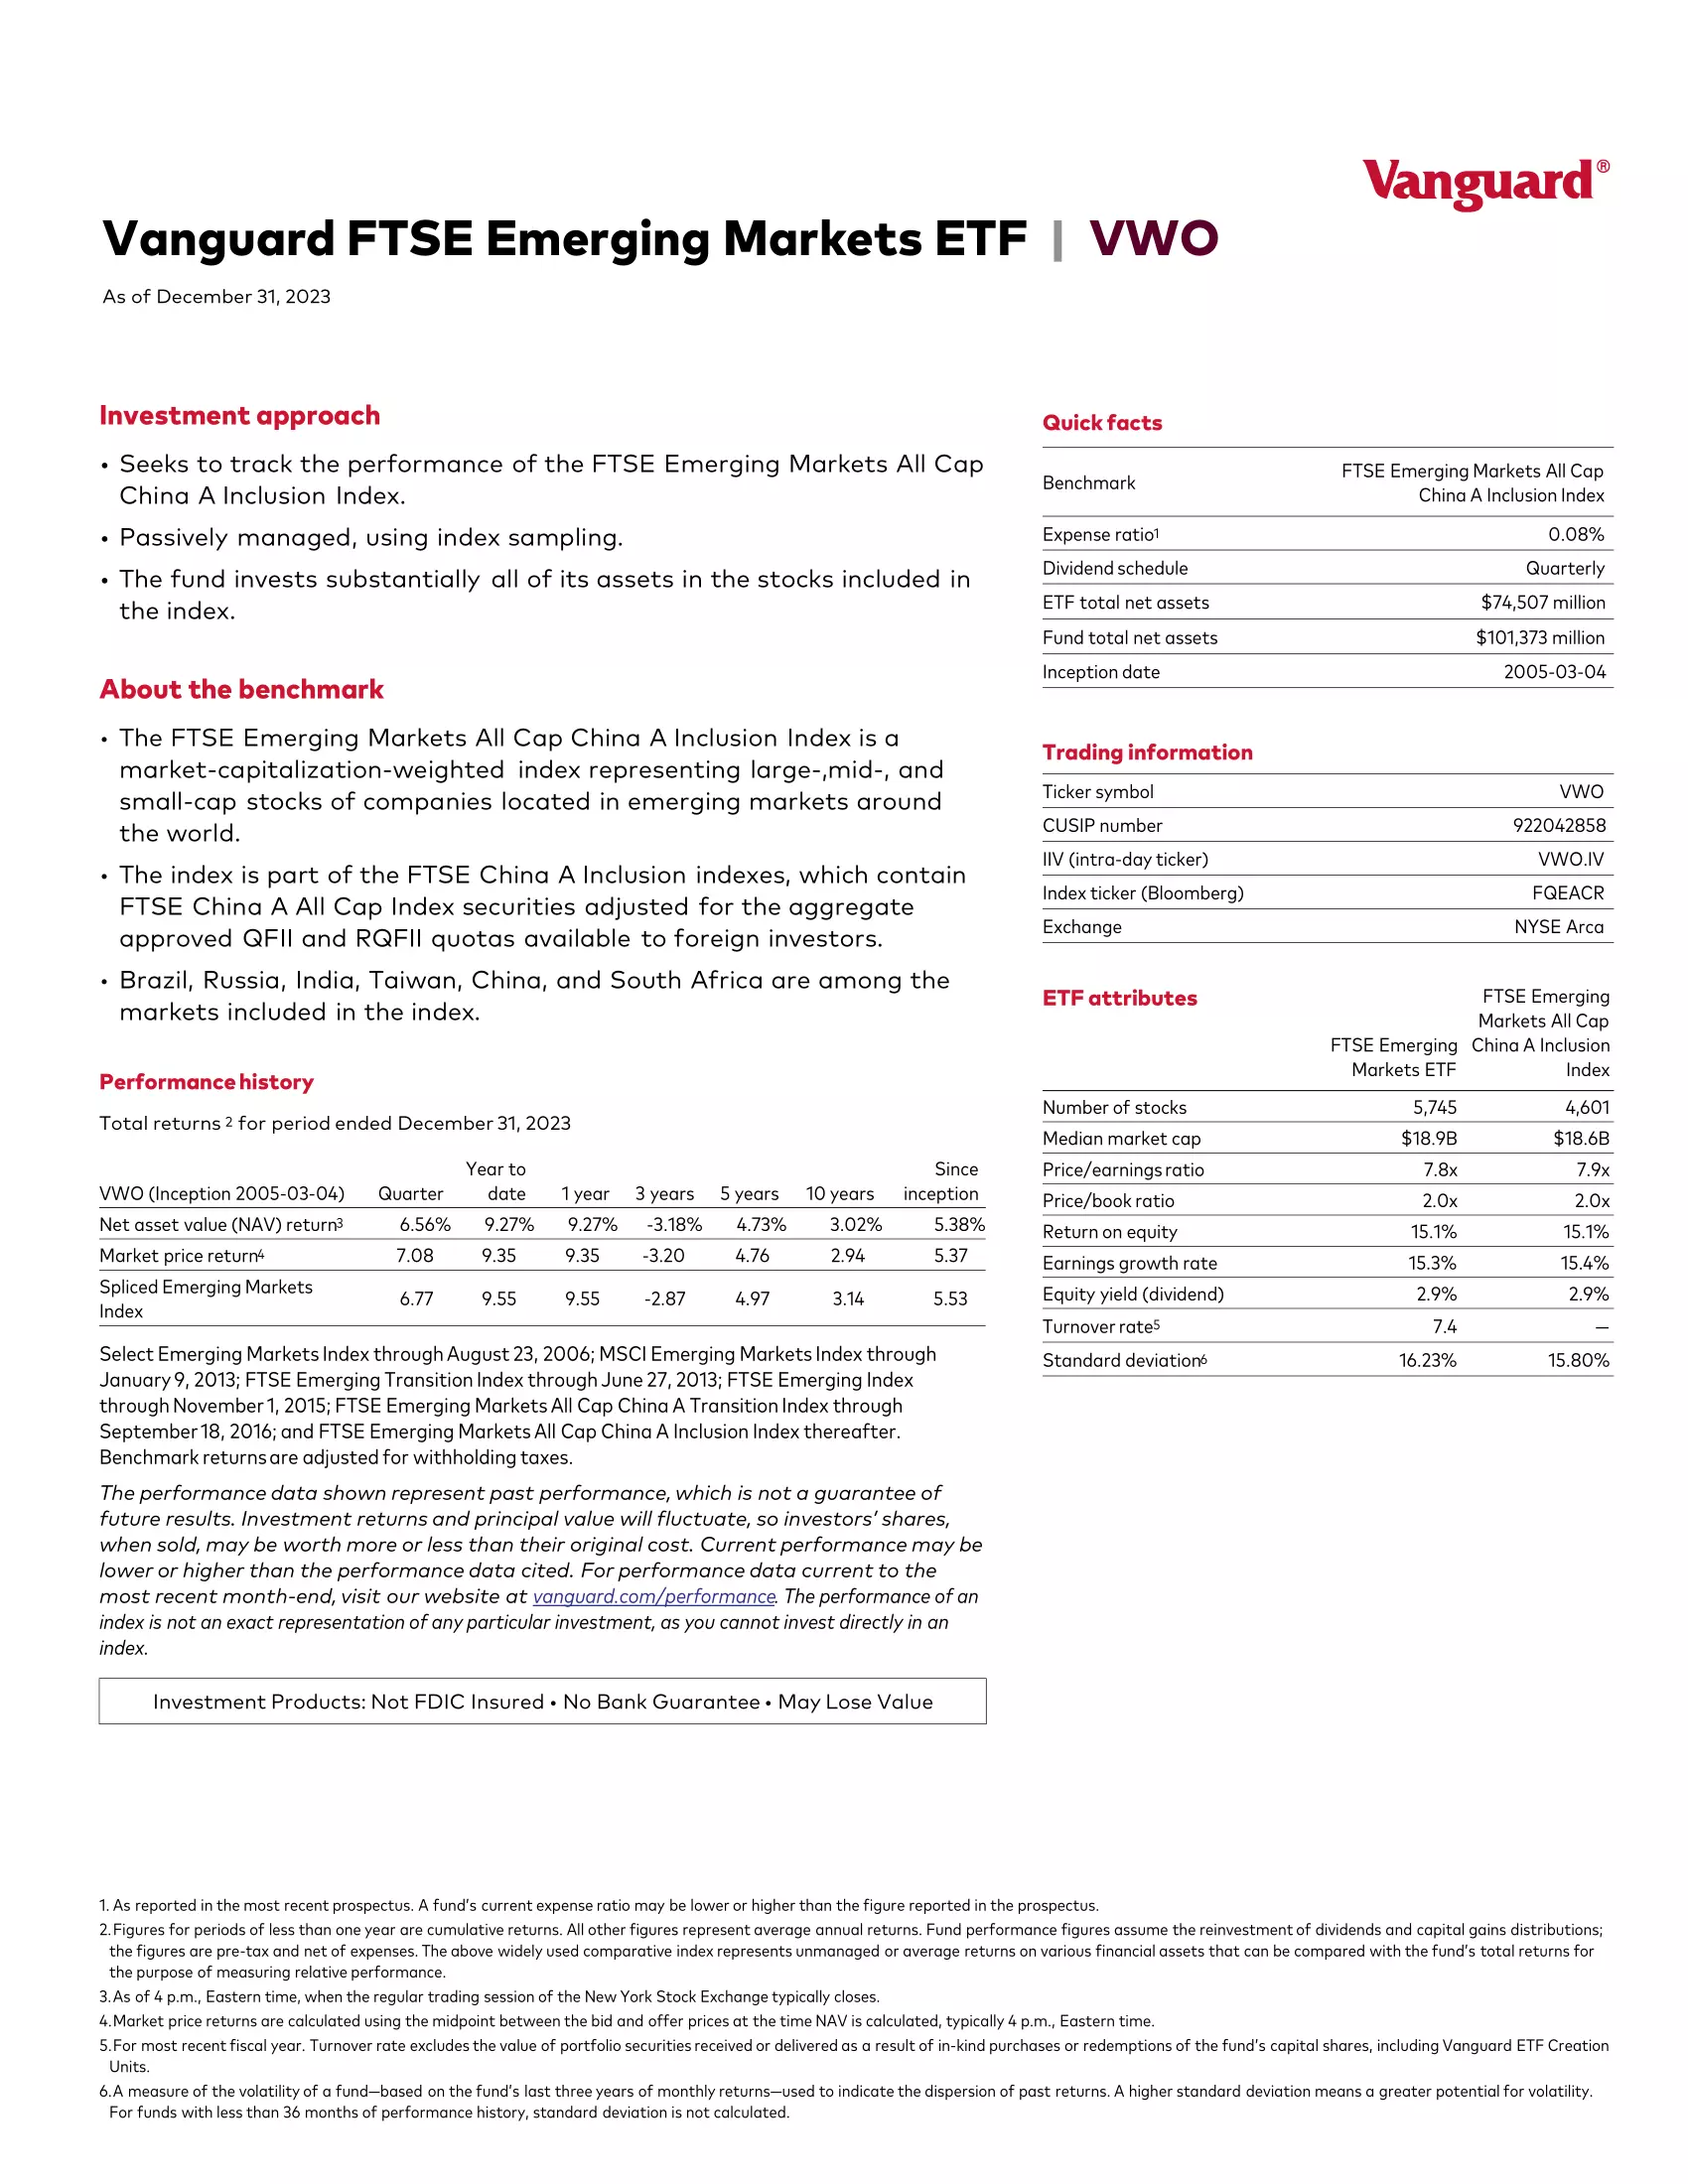 VWO: Vanguard Emerging Markets Stock Index Fund